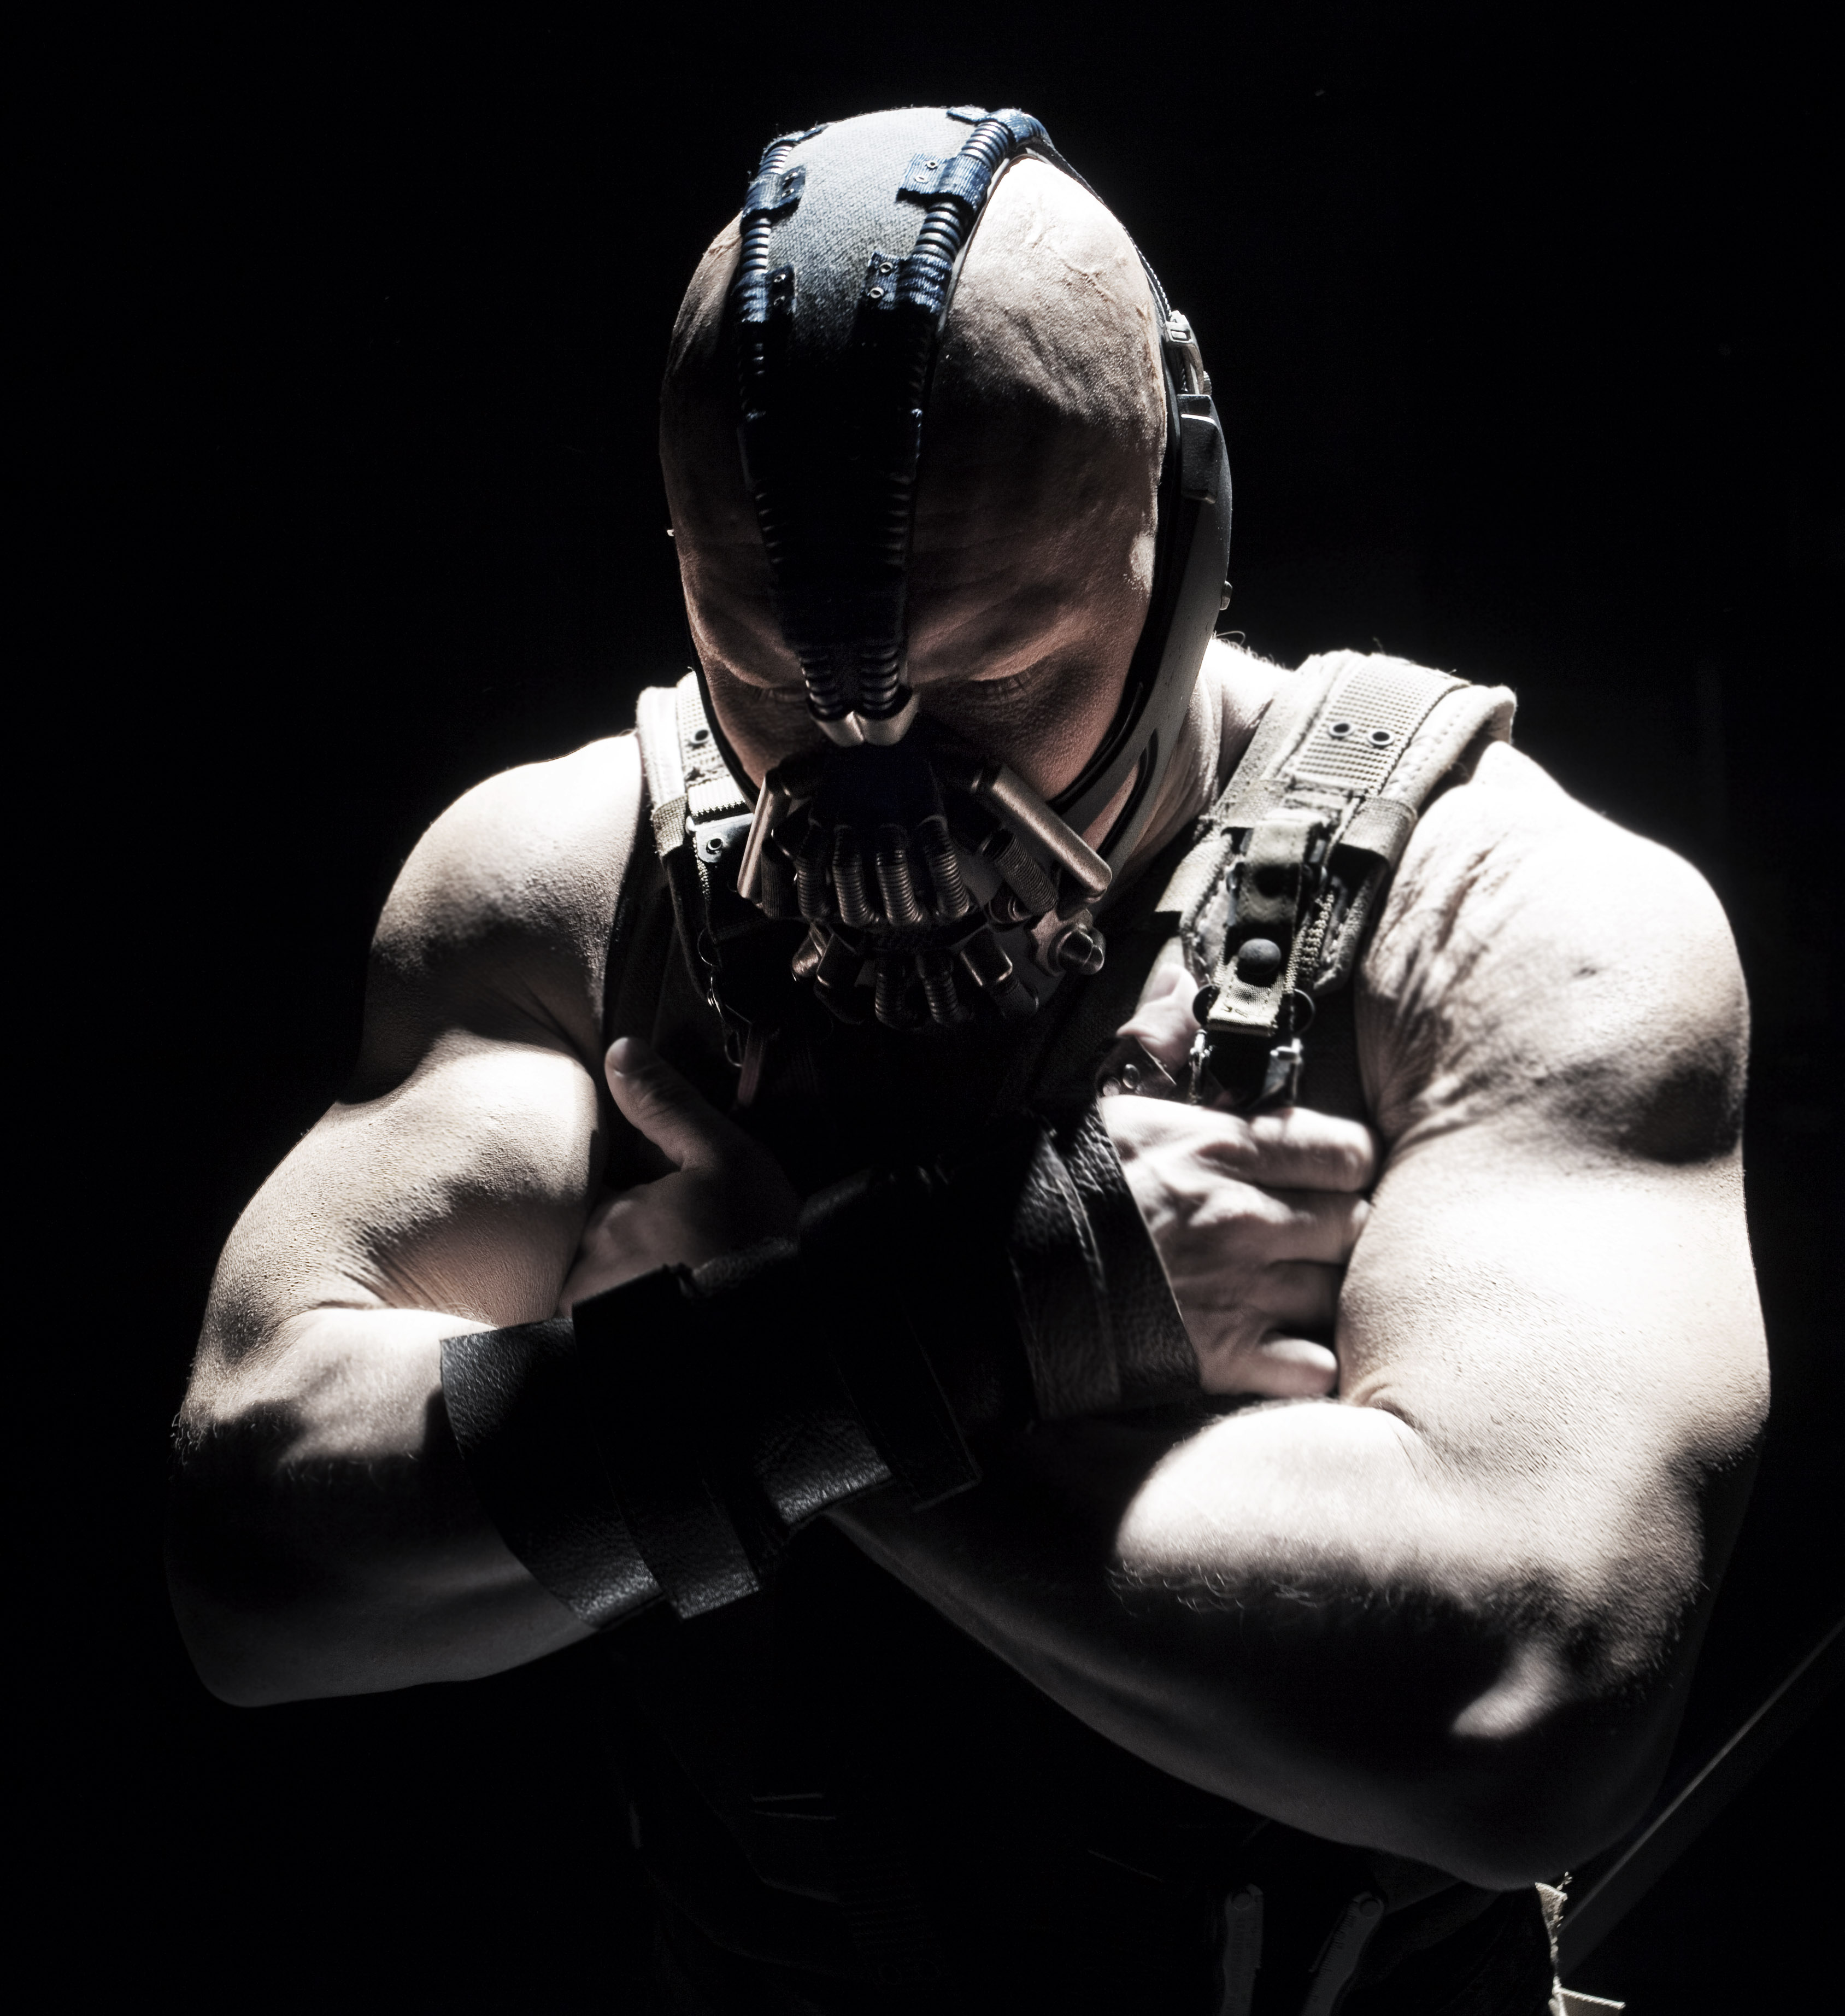 Bane Dark Knight Rises image Tom Hardy2 - Քրիստոֆեր Նոլանը Թոմ Հարդիի մասին. «Դյունկերկի» պրեմիերային ընդառաջ